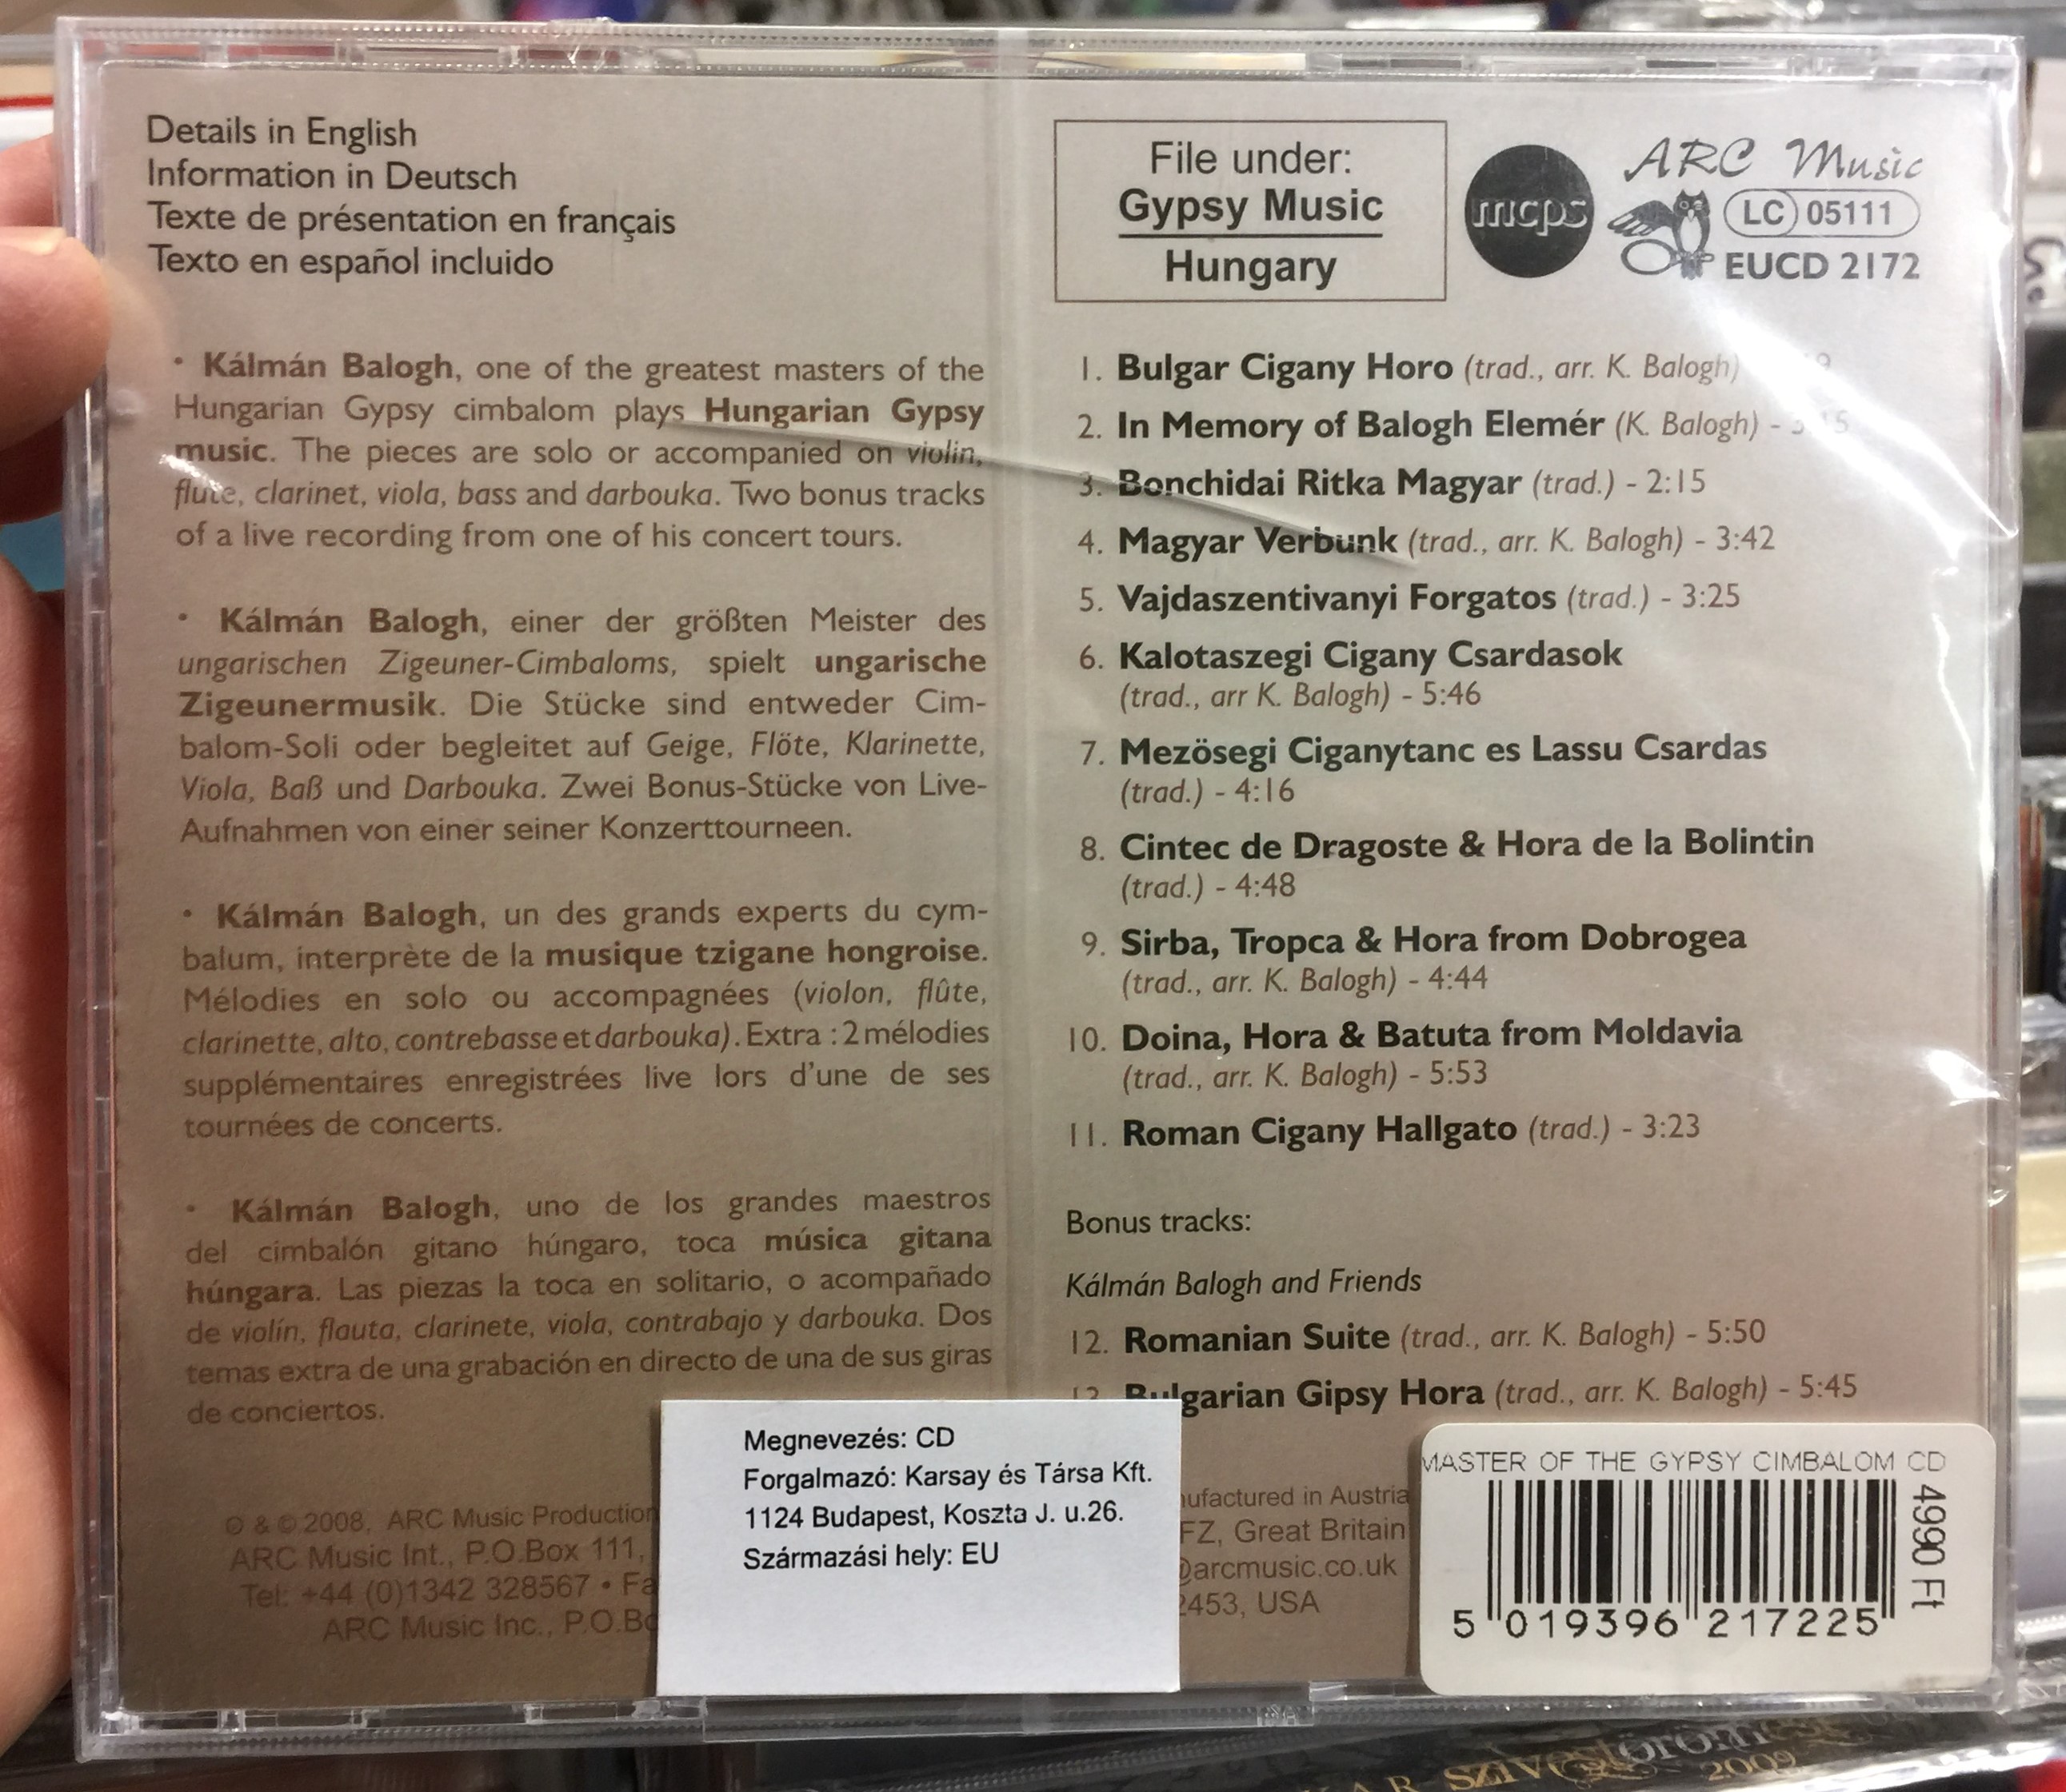 k-lm-n-balogh-master-of-the-gypsy-cimbalom-arc-music-audio-cd-2008-eucd-2172-2-.jpg